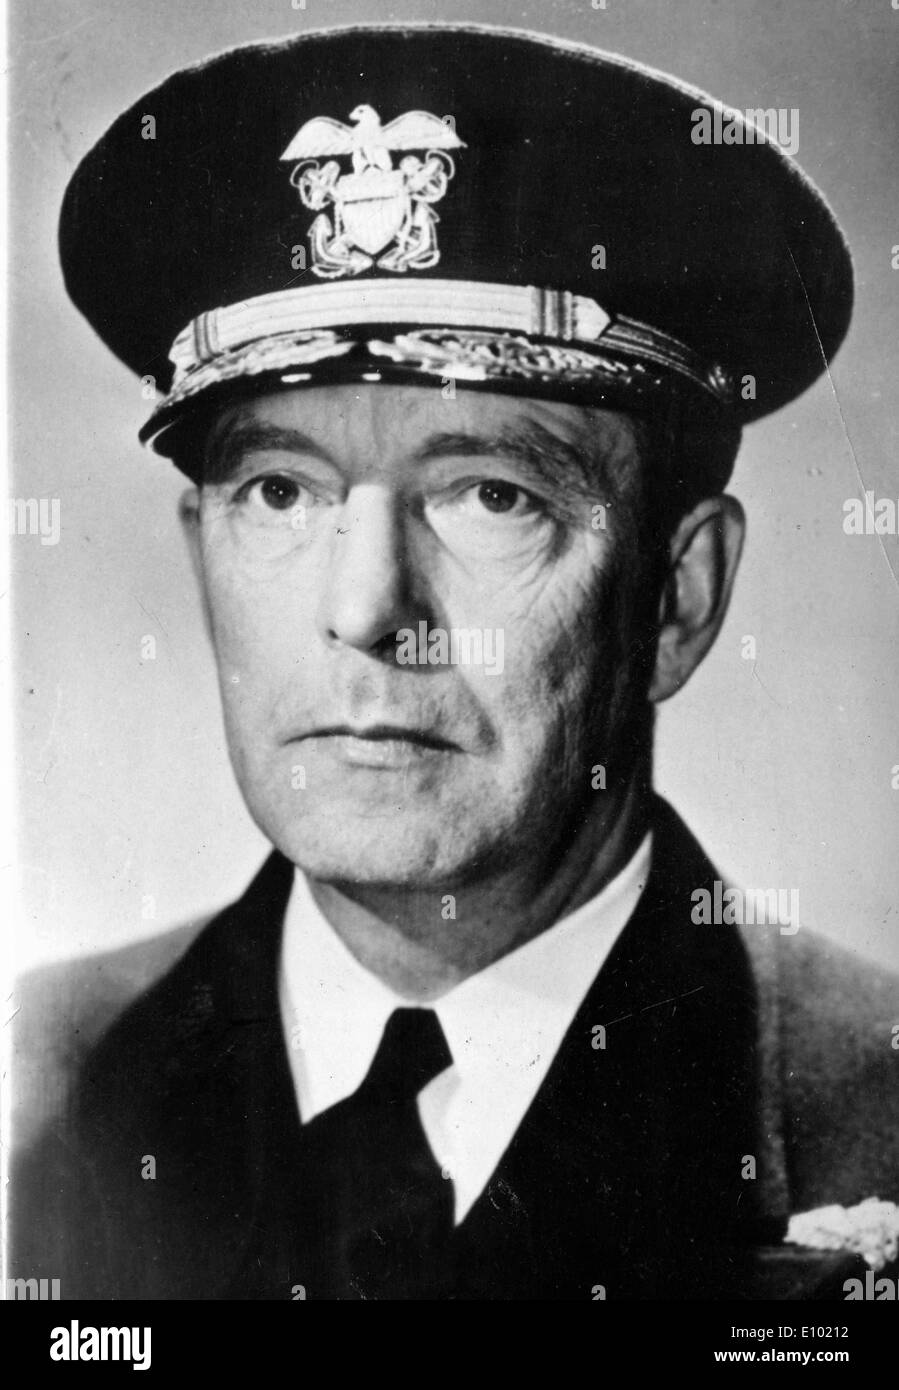 Resultado de imagem para o almirante Arthur Radford no Brasil